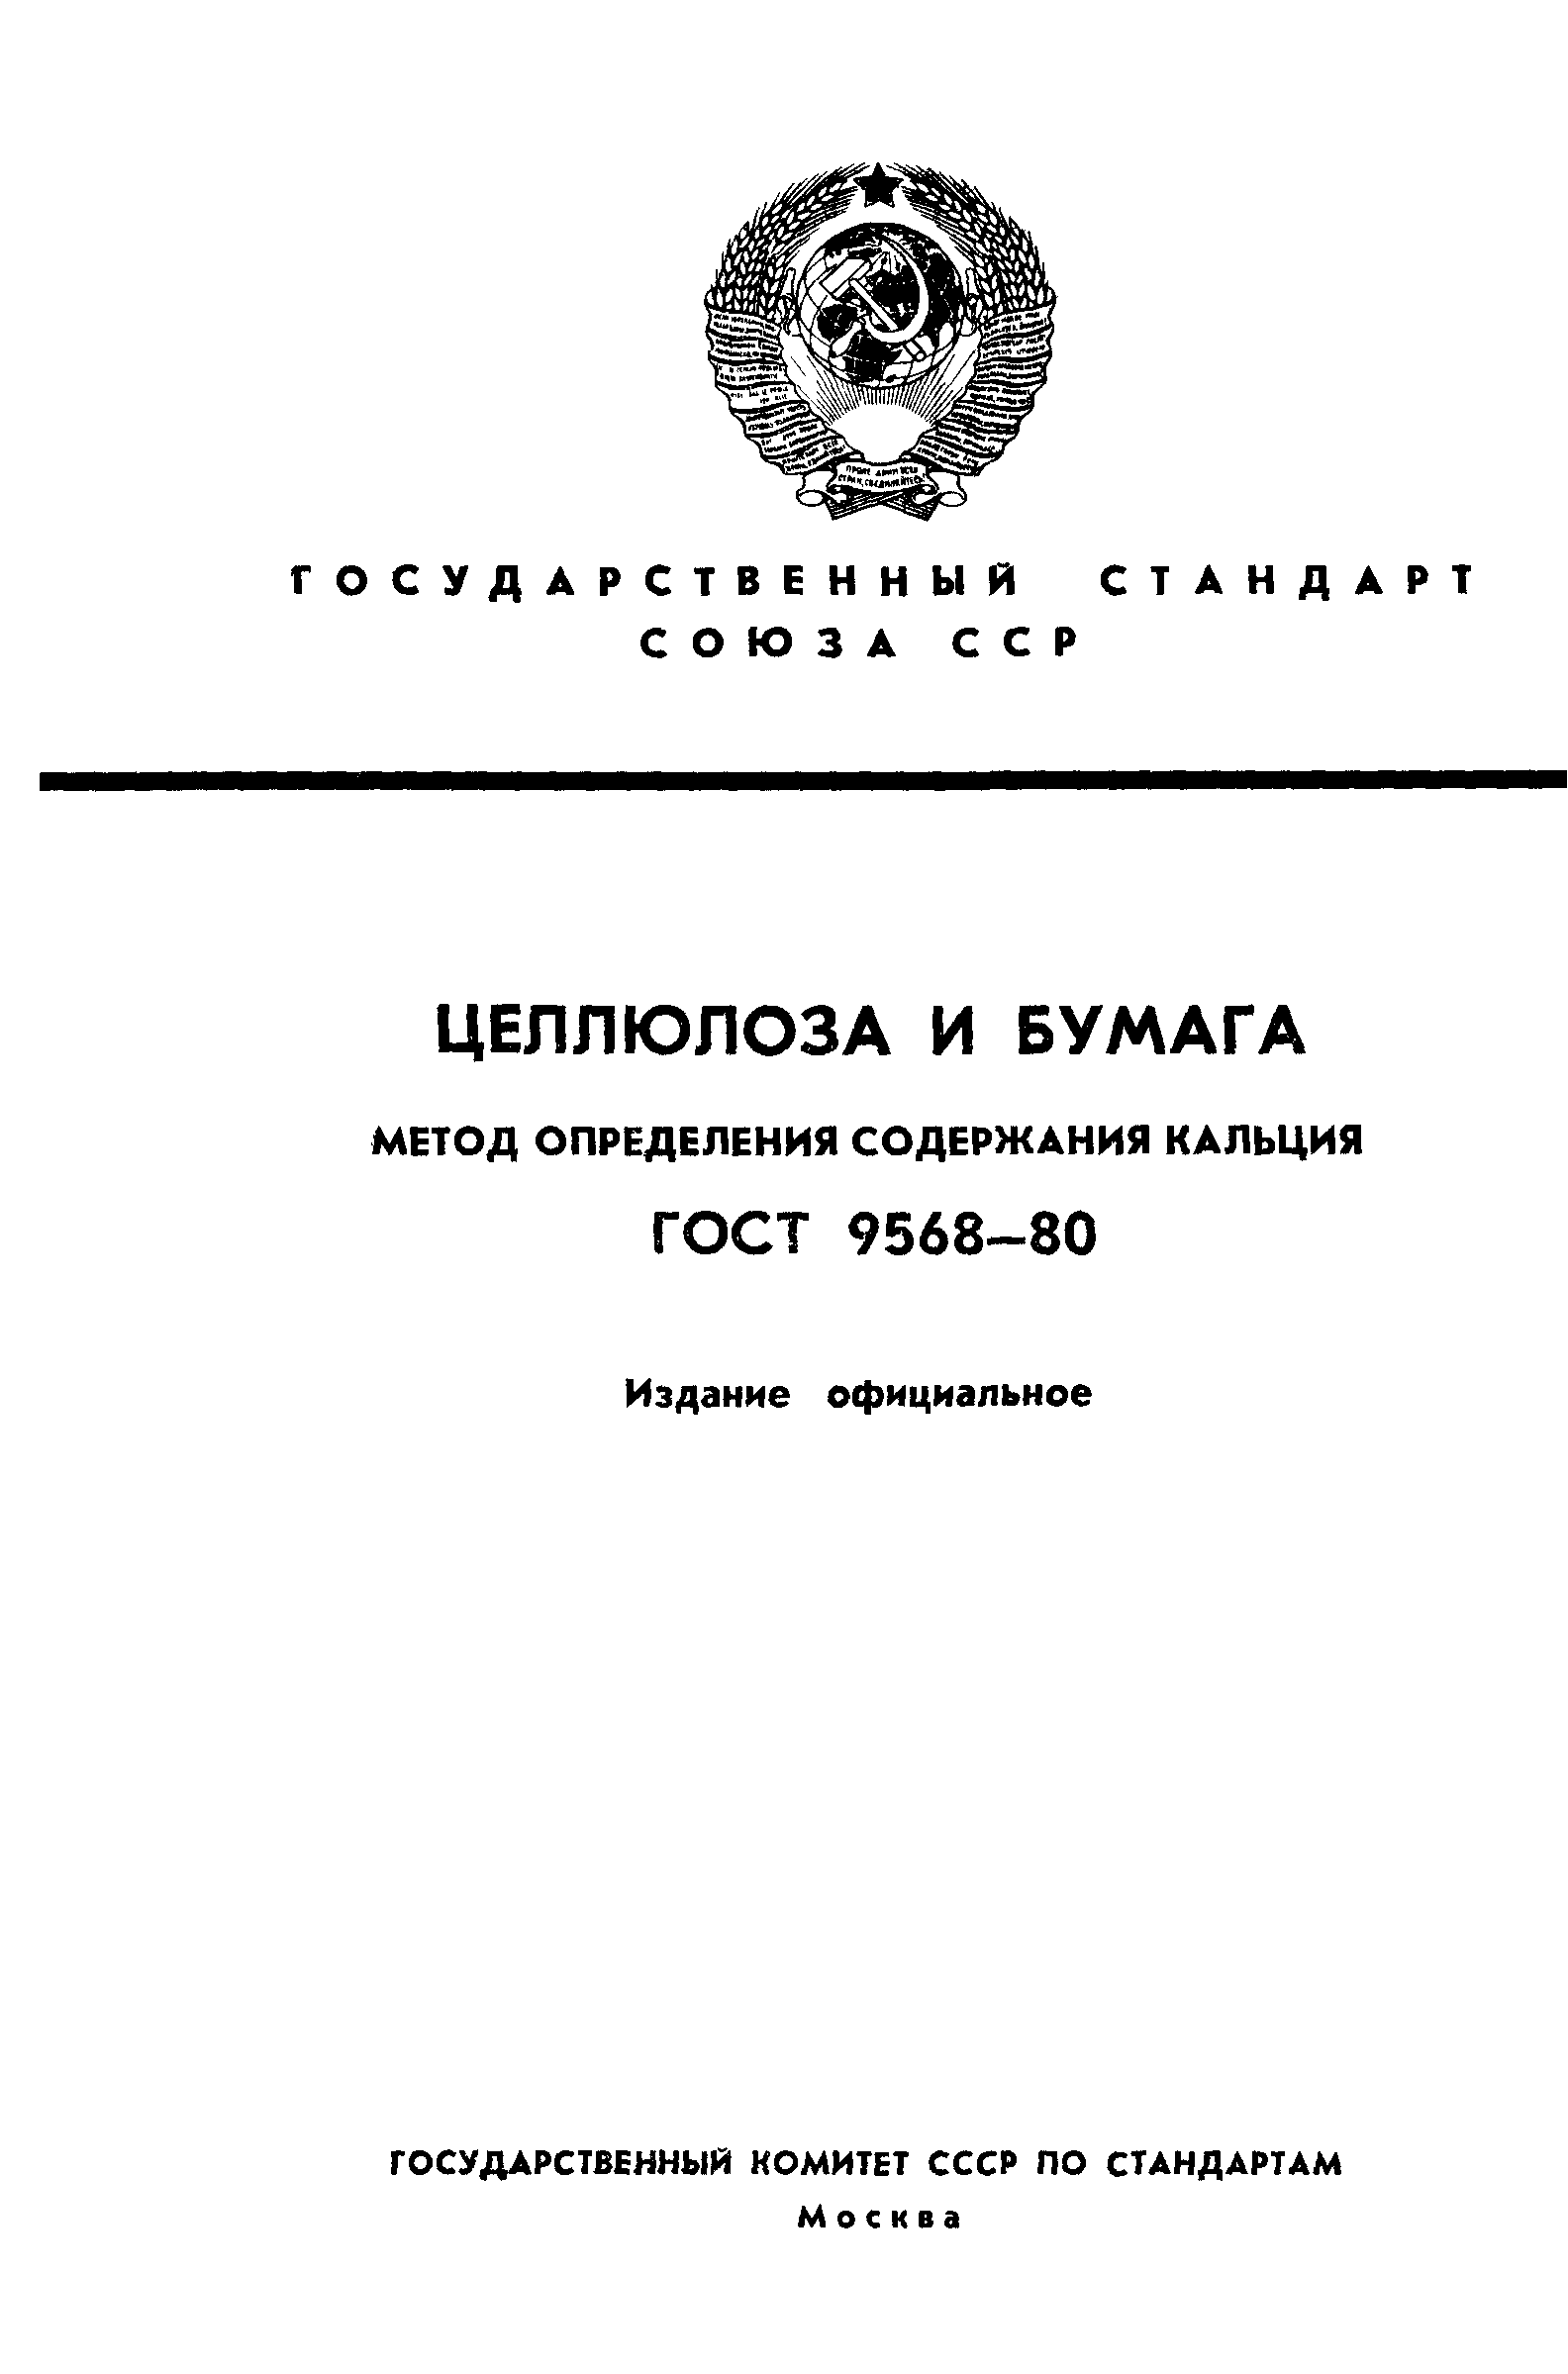 ГОСТ 9568-80